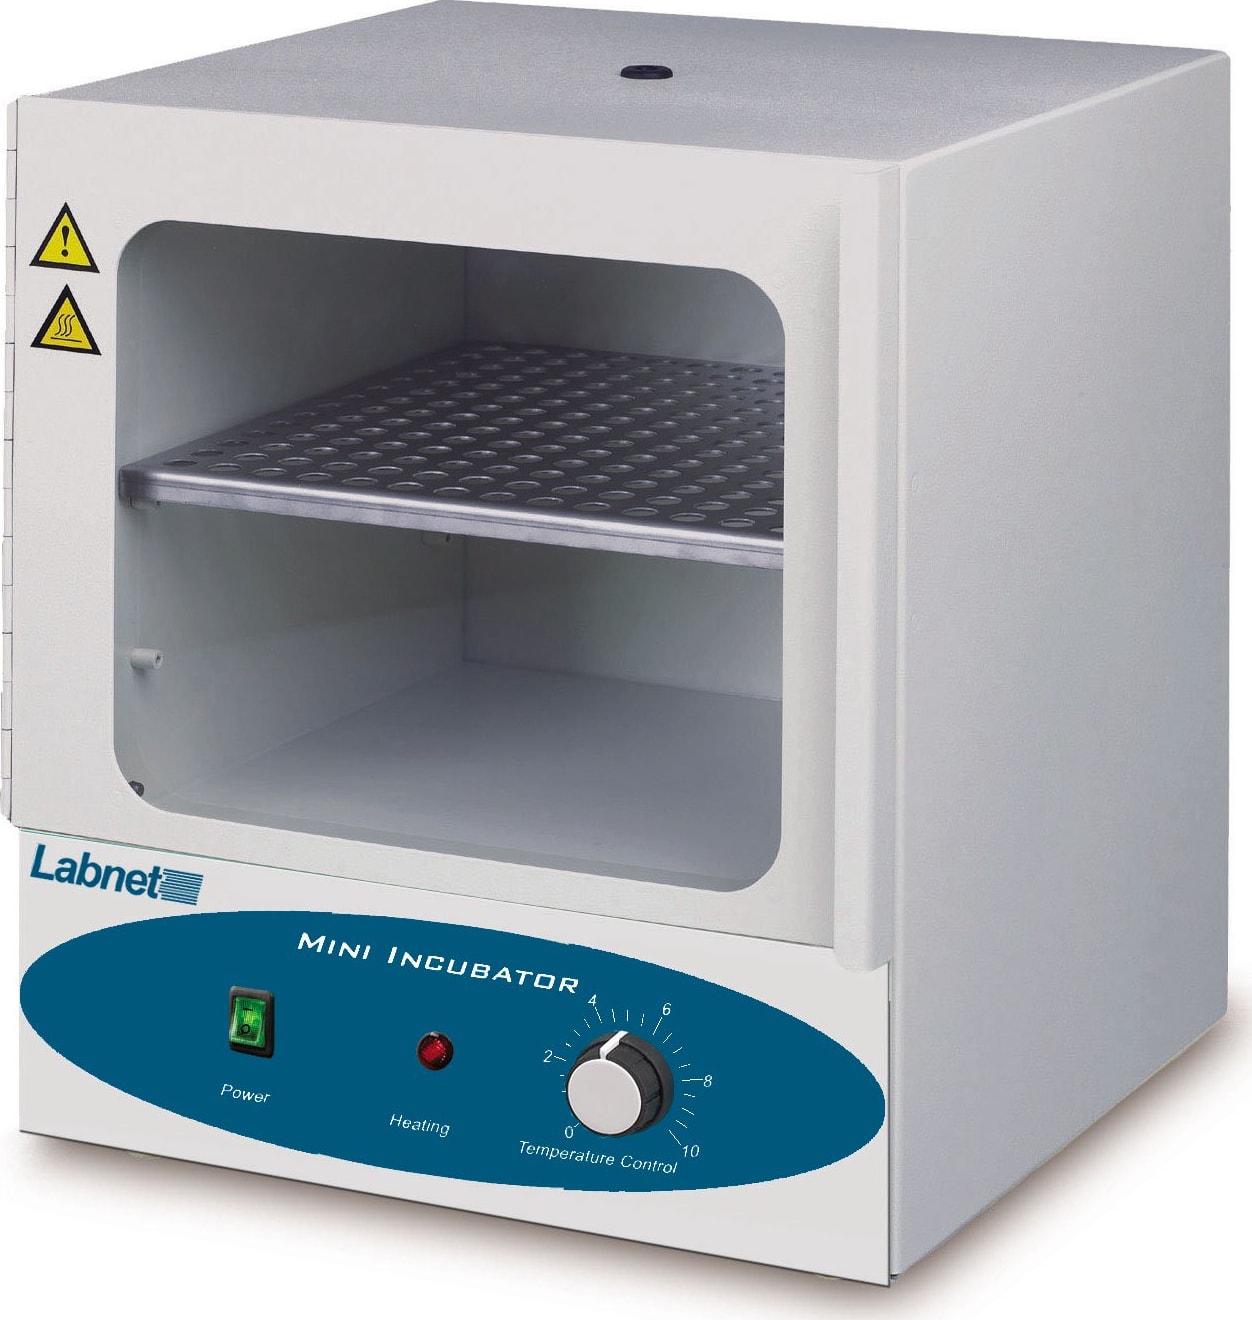 Labnet Mini Microbiology and Hematology Incubator